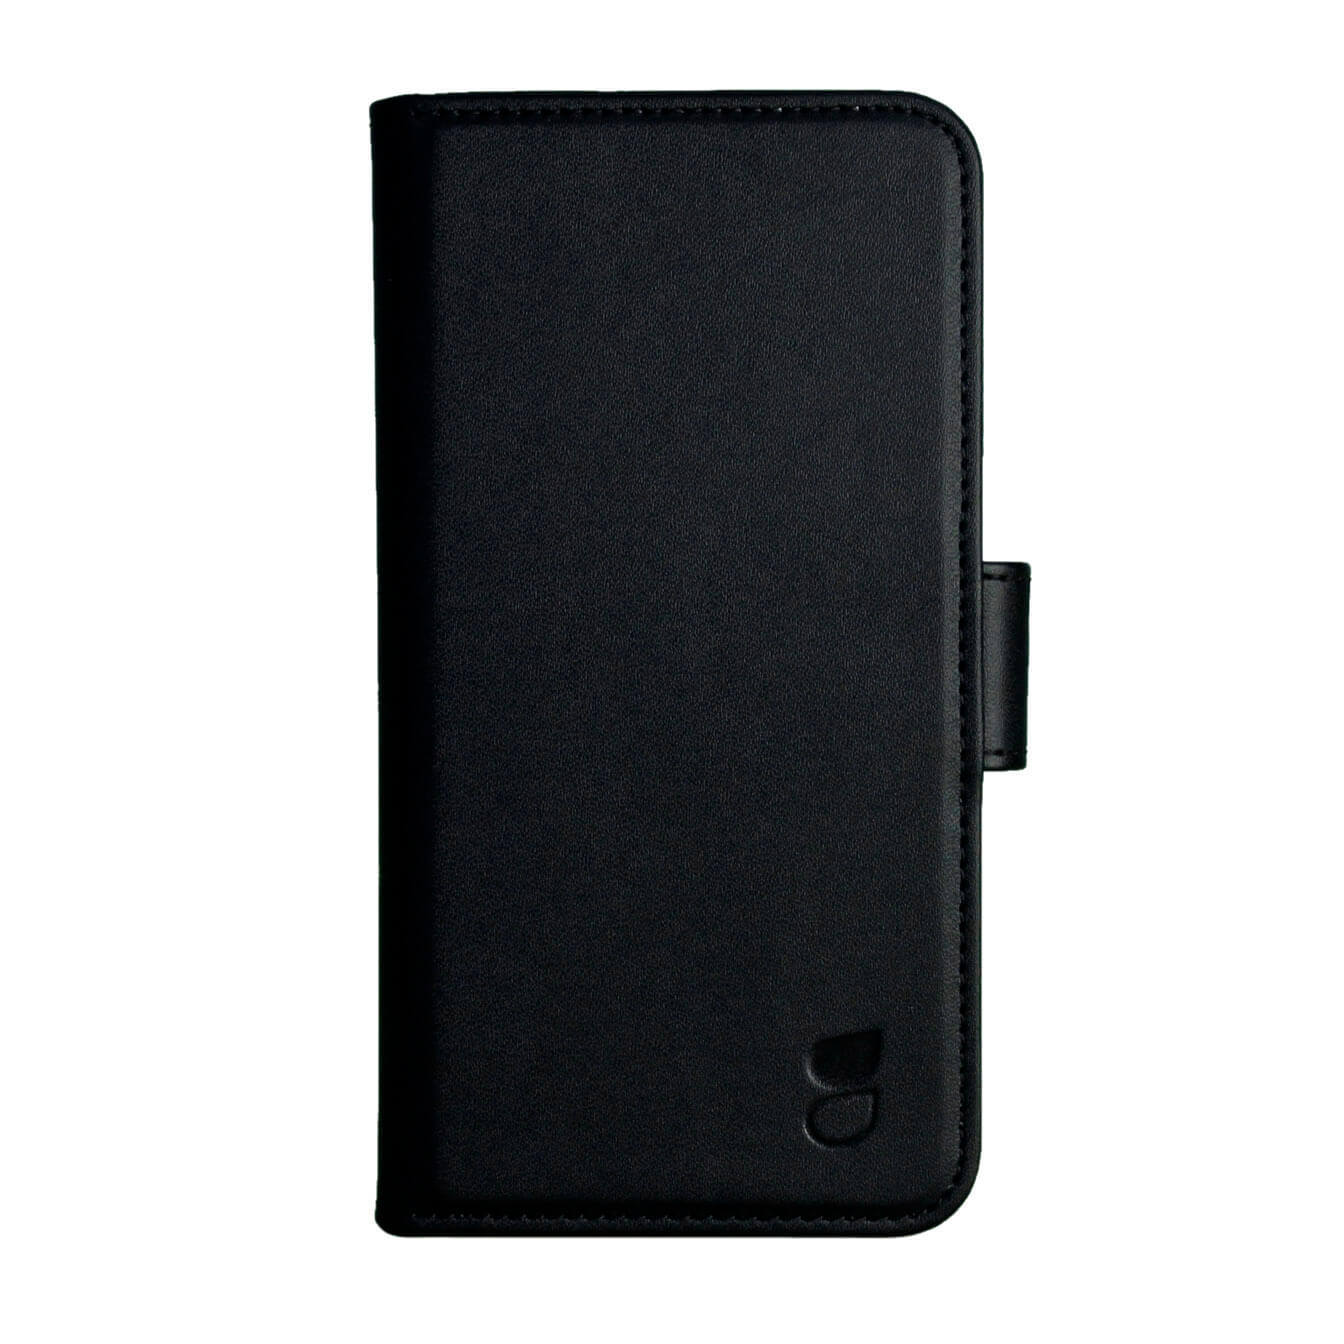 Wallet Black - iPhone X / XS 7